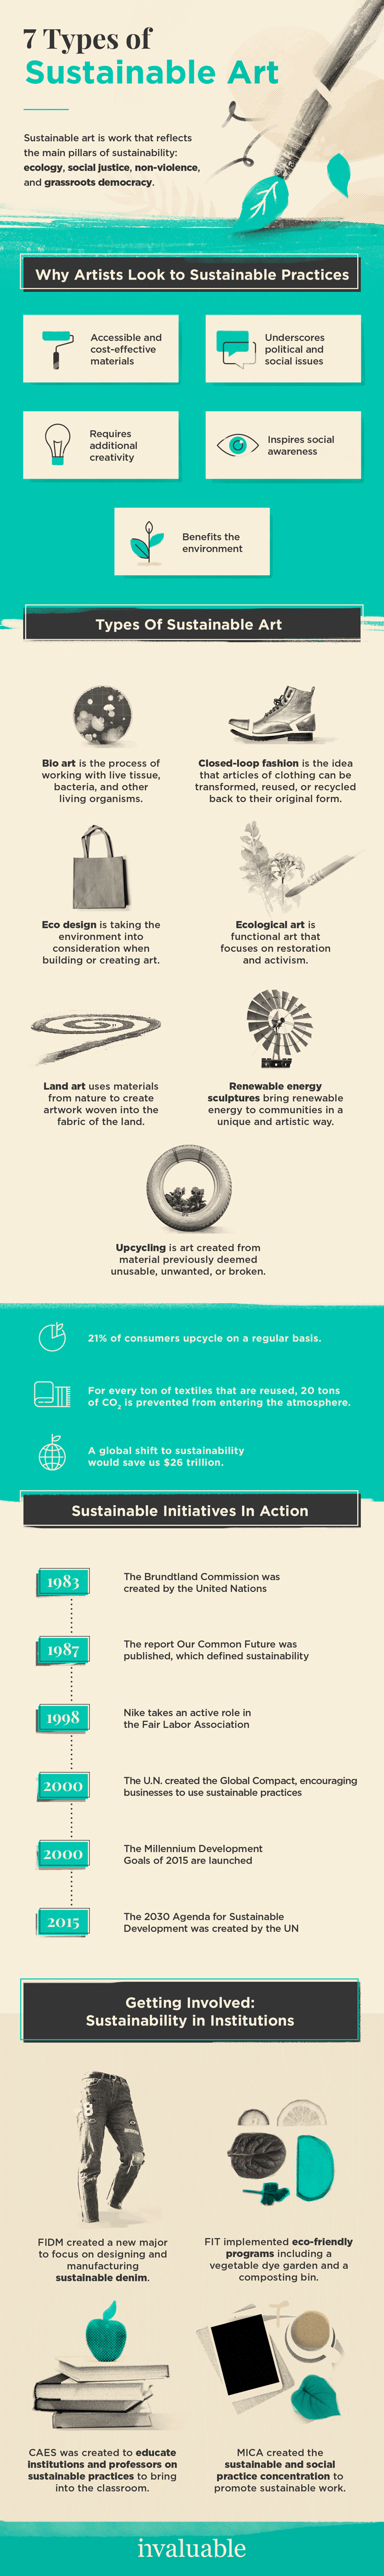 sustainability-art-infographic